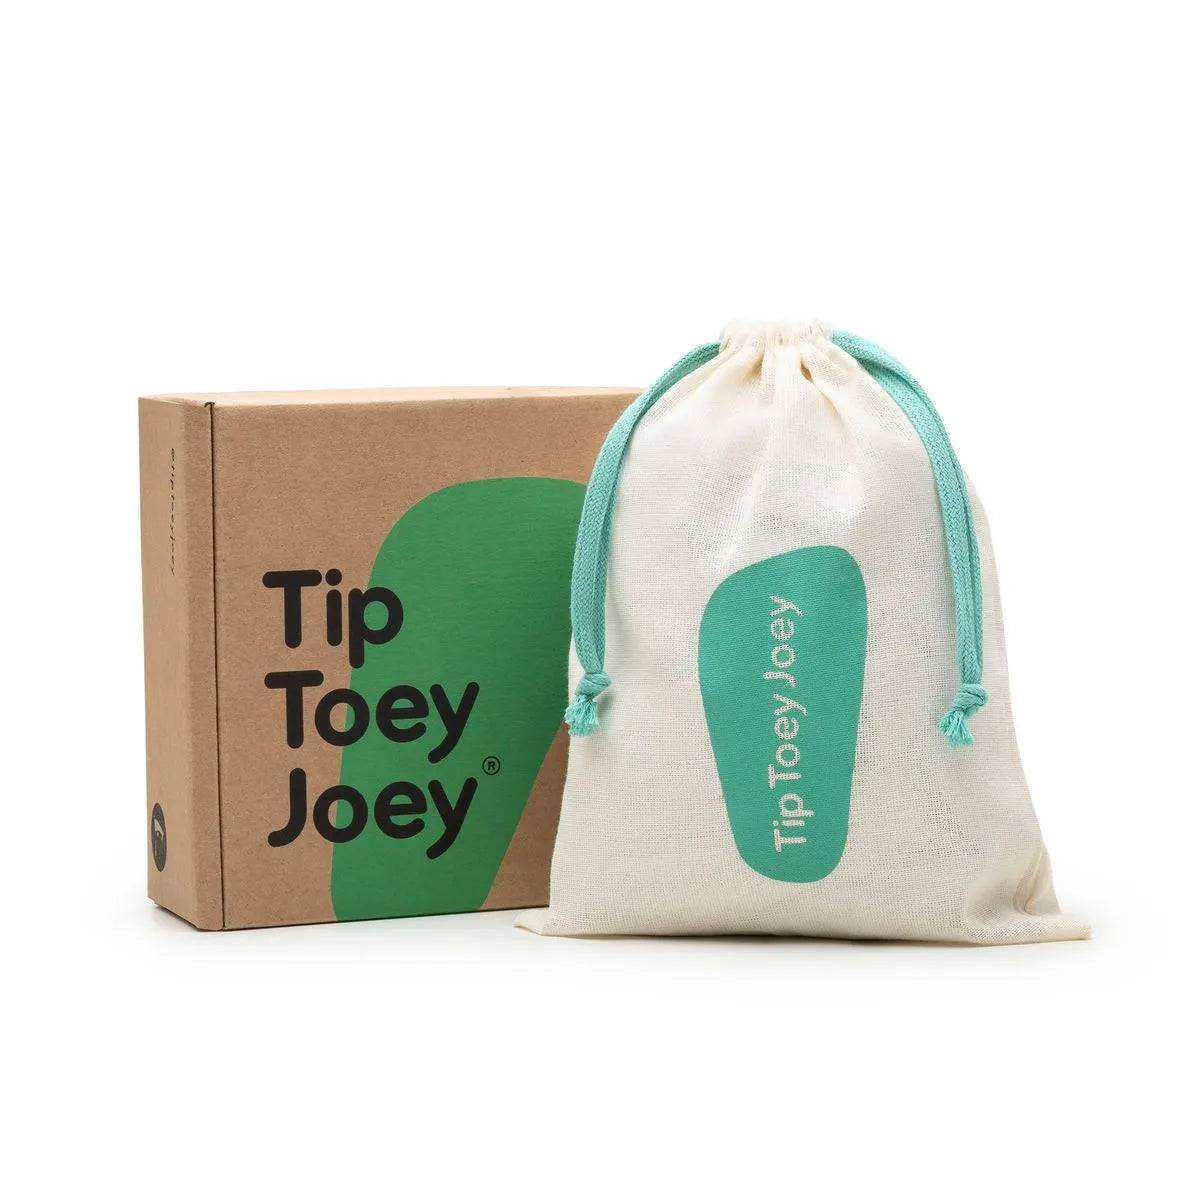 Tip Toey Joey - Ténis Bossy Colors Tapioca